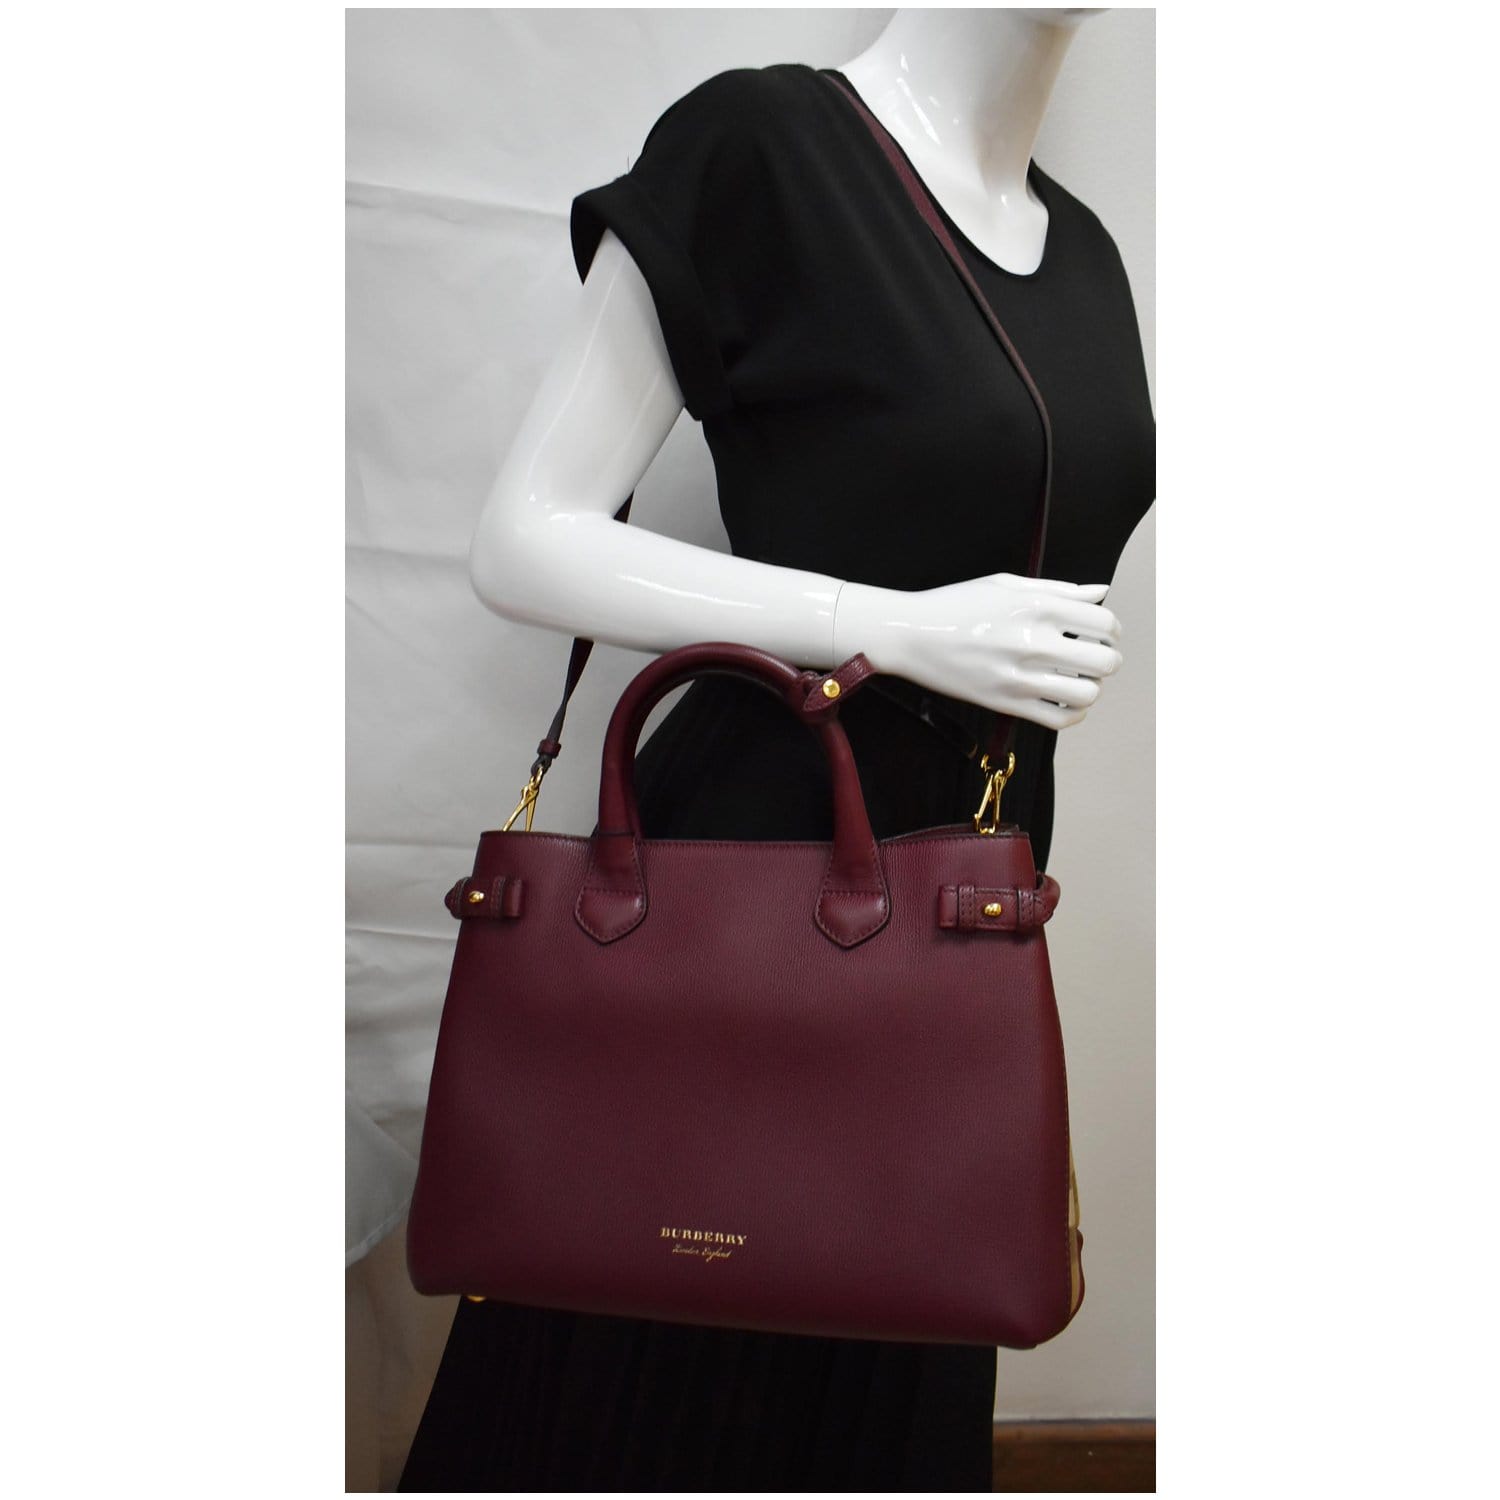 Burberry Monogram Tote & pouch shoulder Bag Handbag Brown Red Canvas -  Excellent